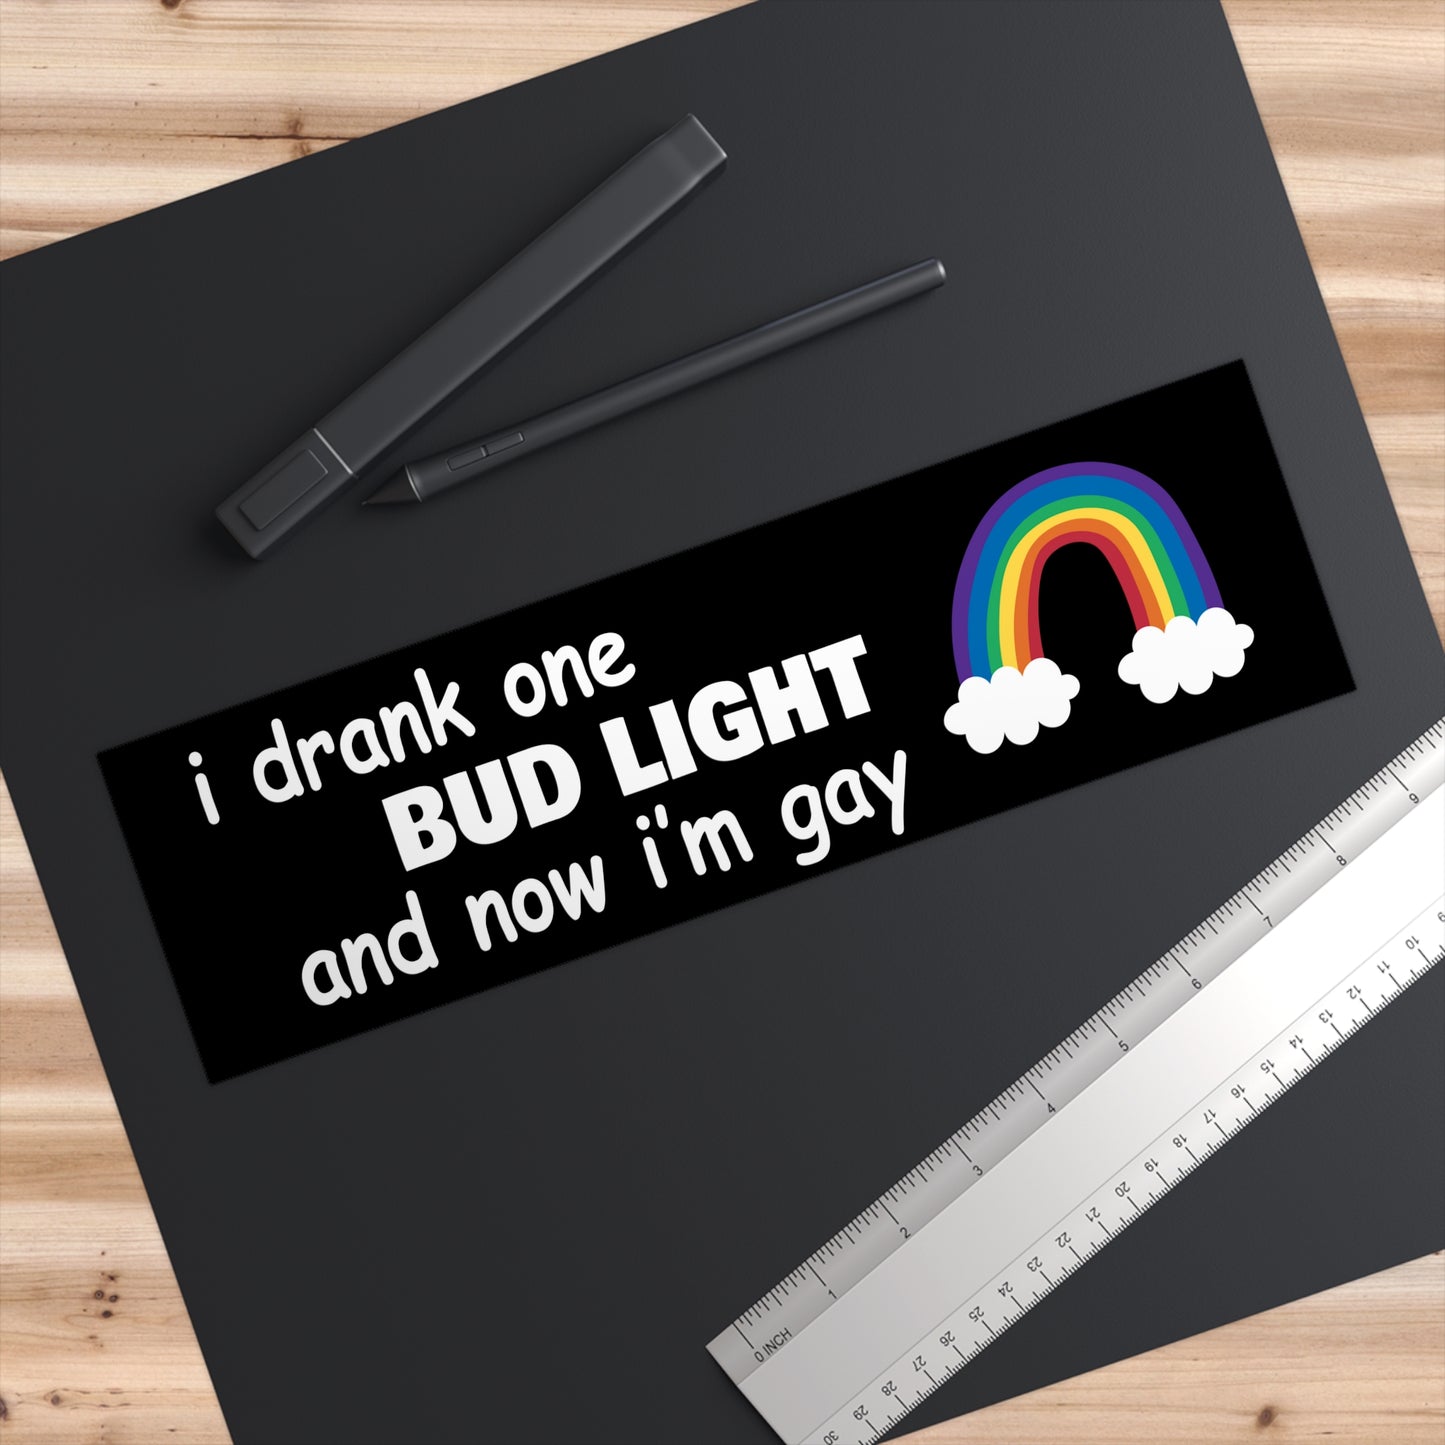 I Drank One Bud Light And Now I'm Gay Bumper Sticker